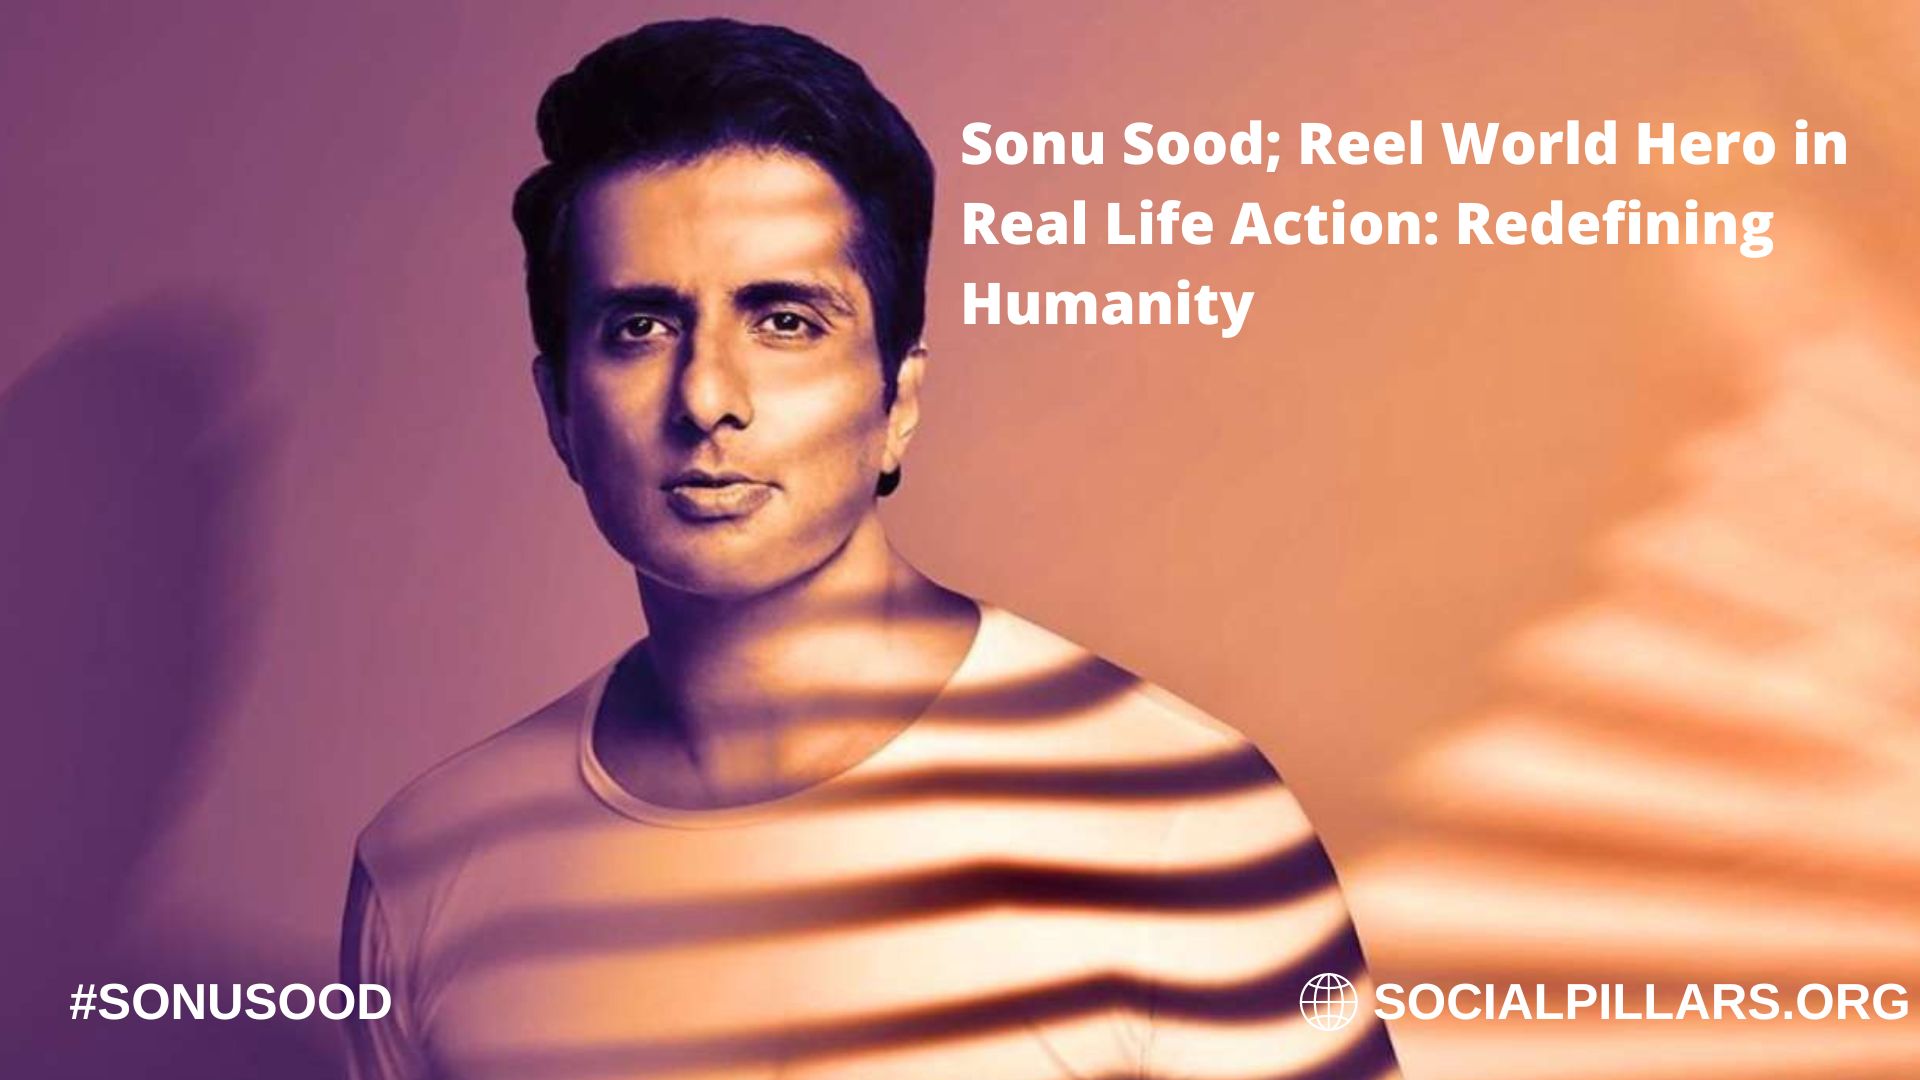 Sonu Sood; Reel World Hero in Real Life Action Redefining Humanity